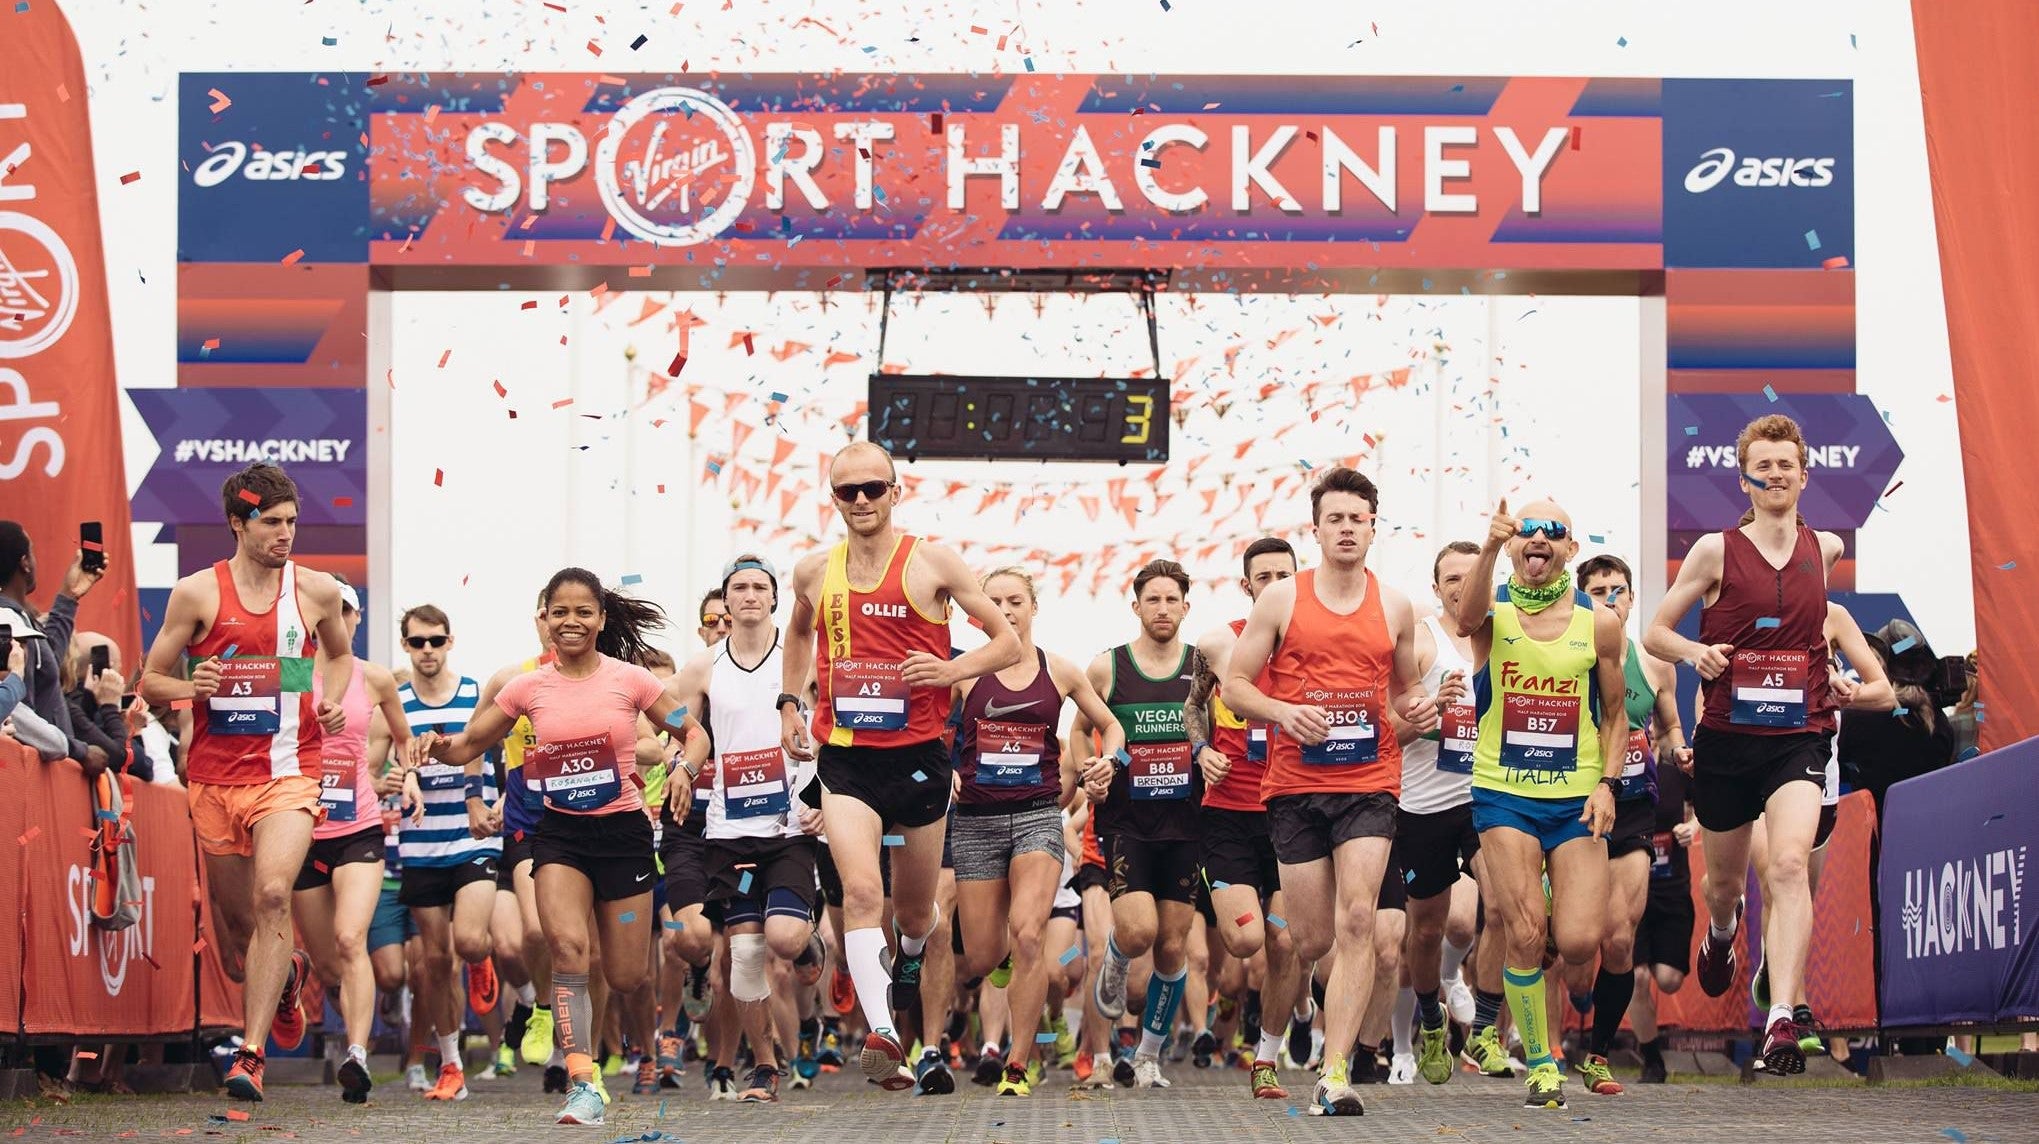 Hackney half marathon